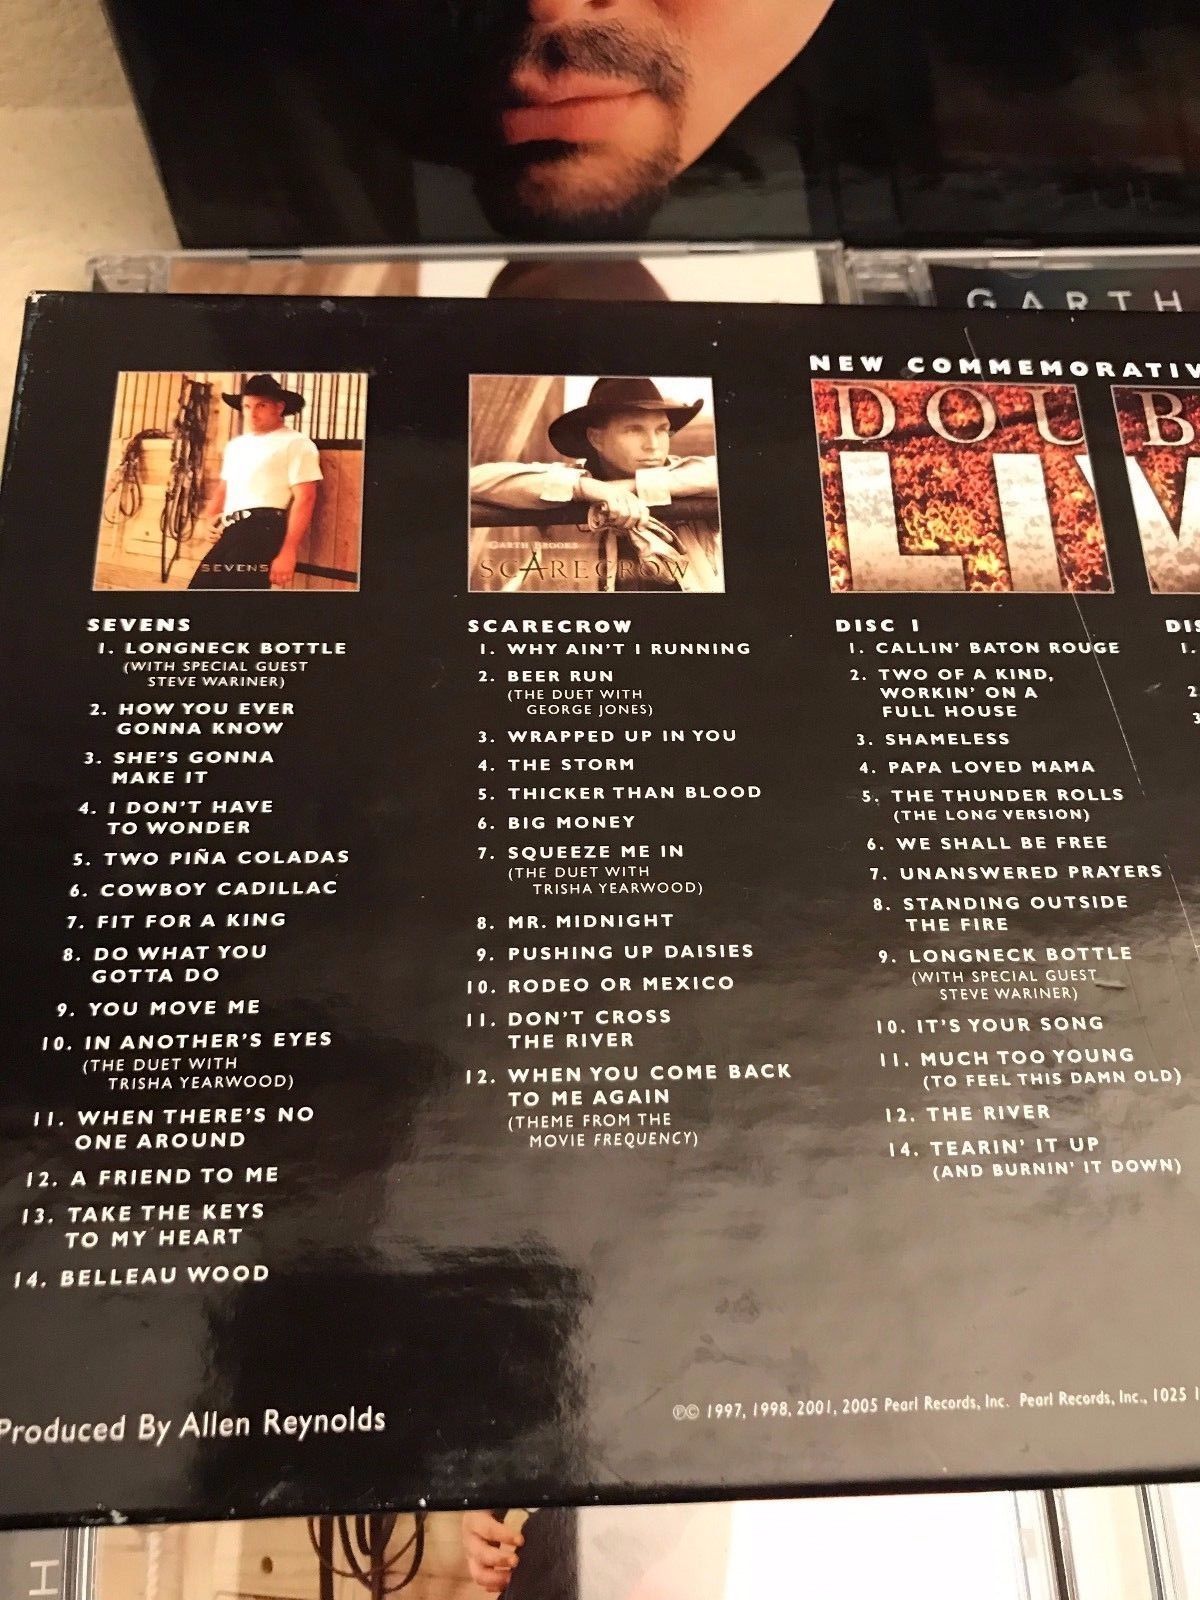 Garth Brooks - The Limited Series Box Set Music 5 CDs plus All Access DVD -  NEW 854206001015